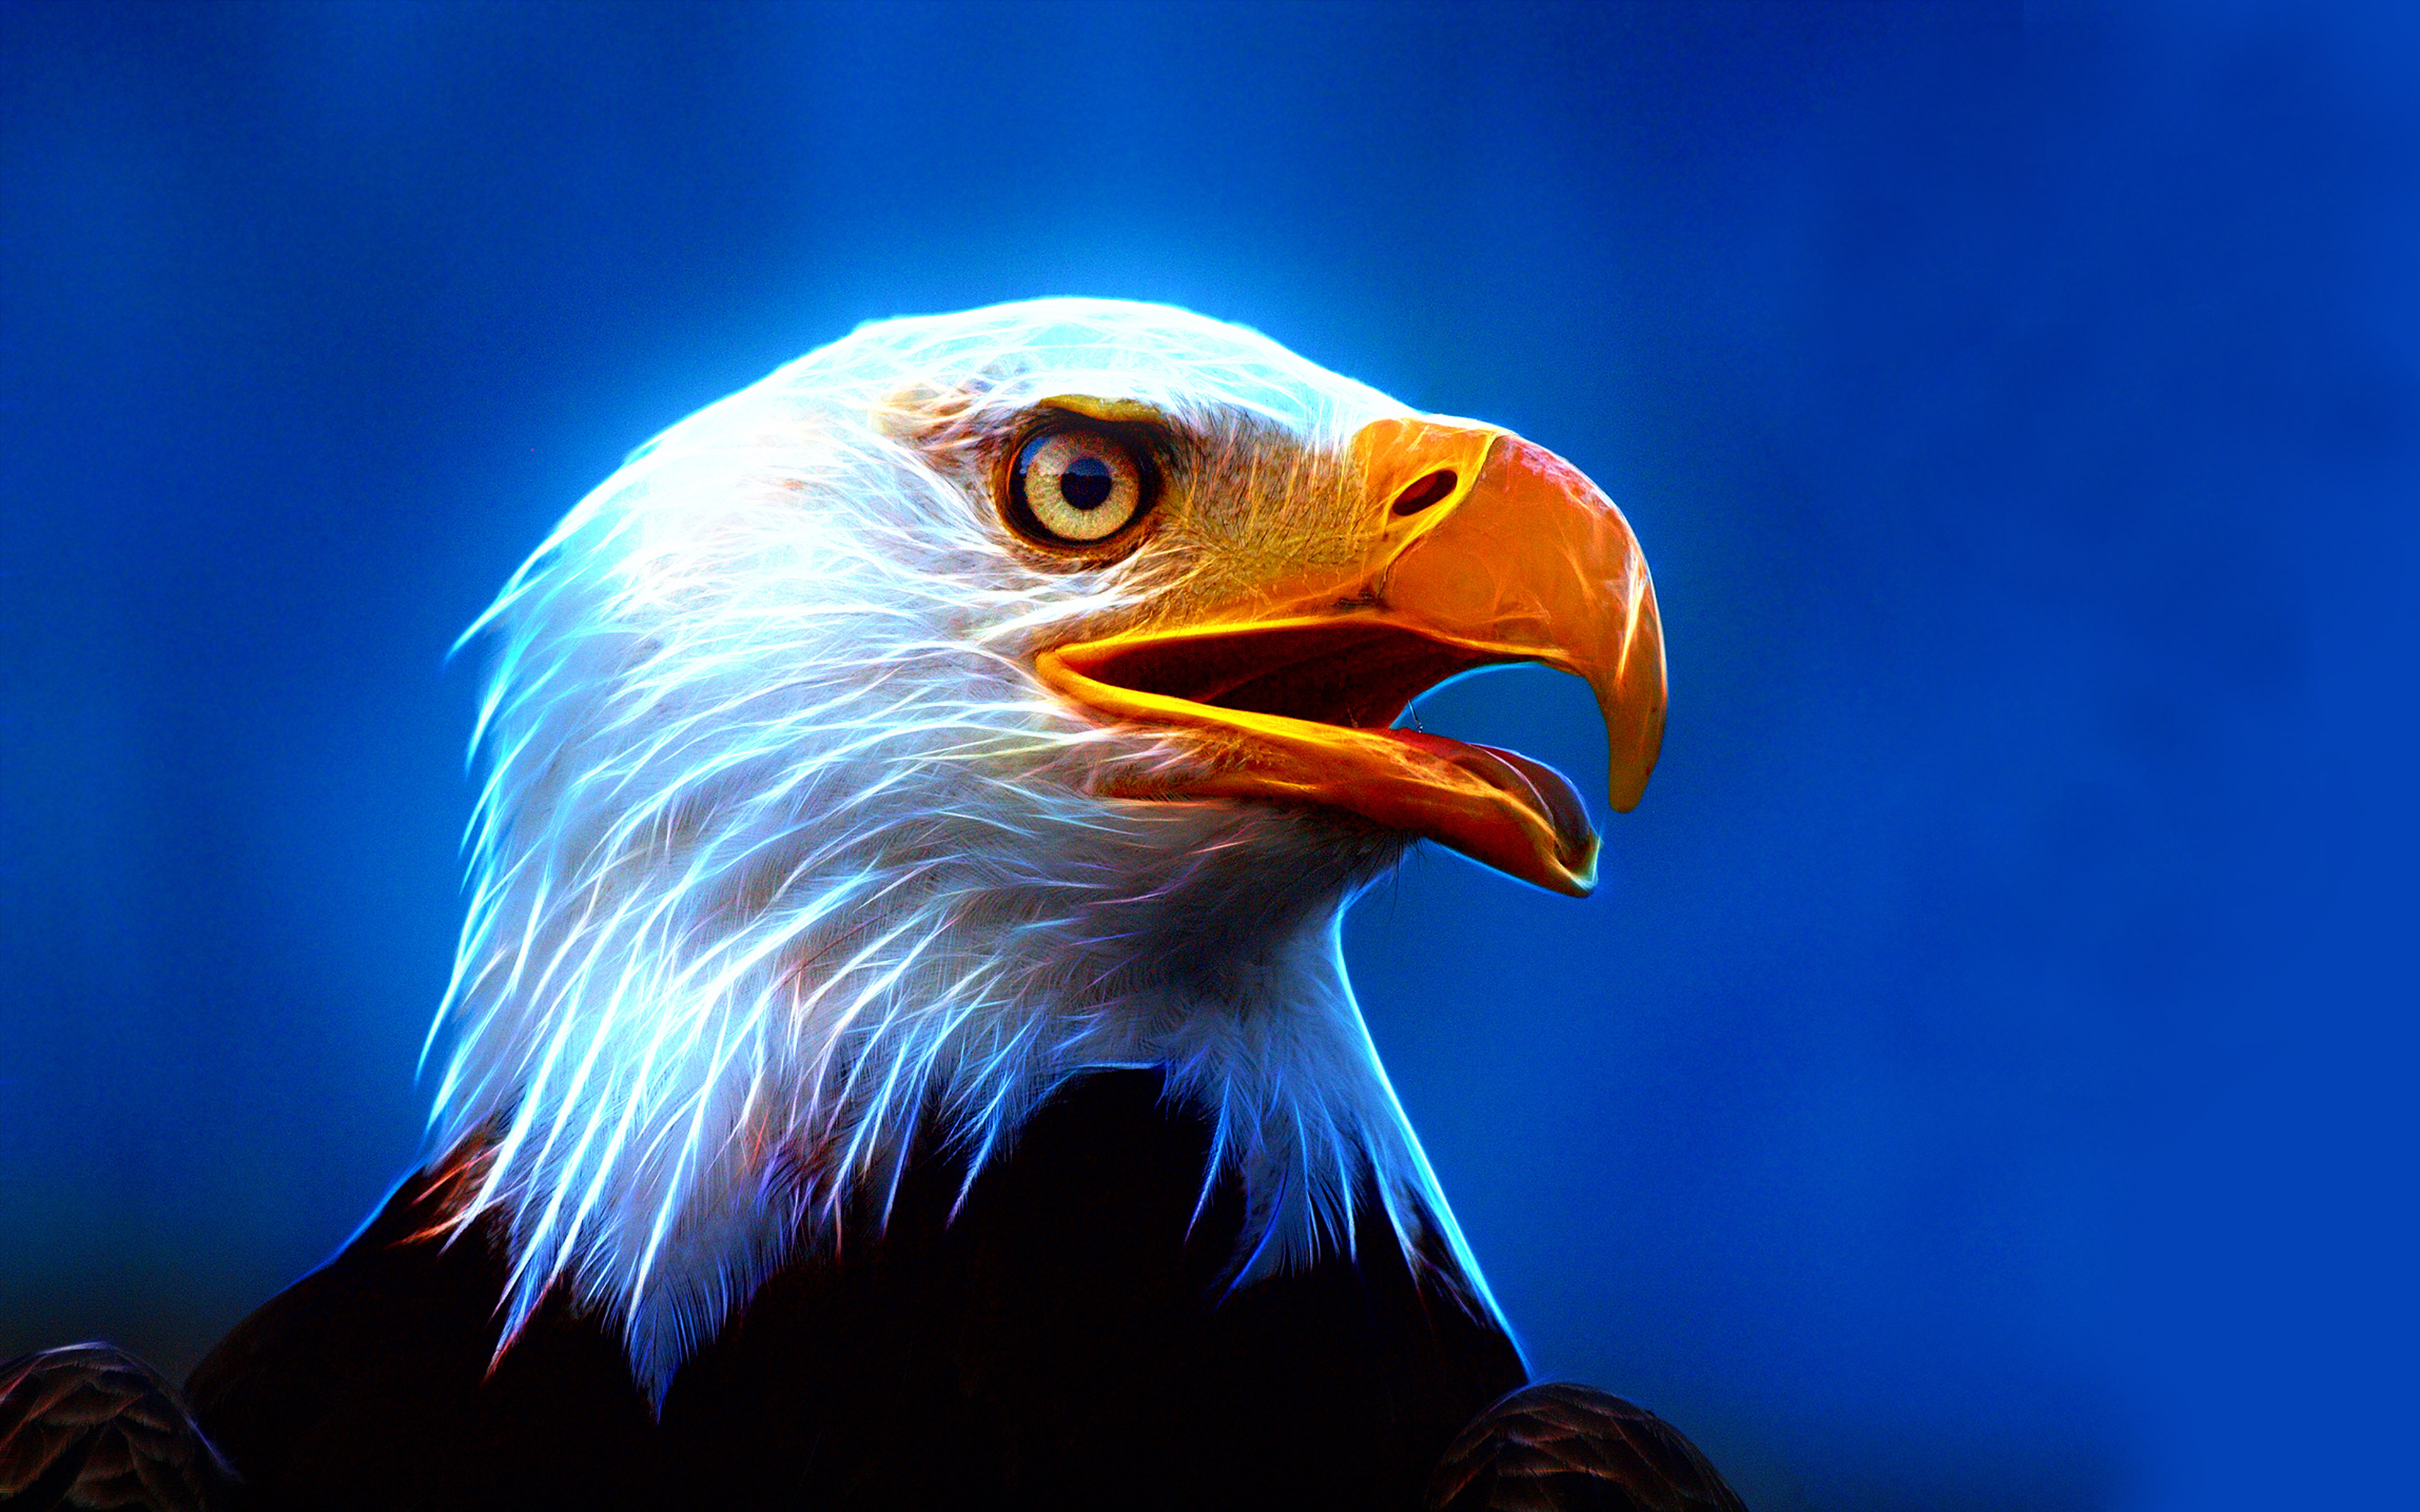 Golden Eagle Portrait against a black background - Rowlingend